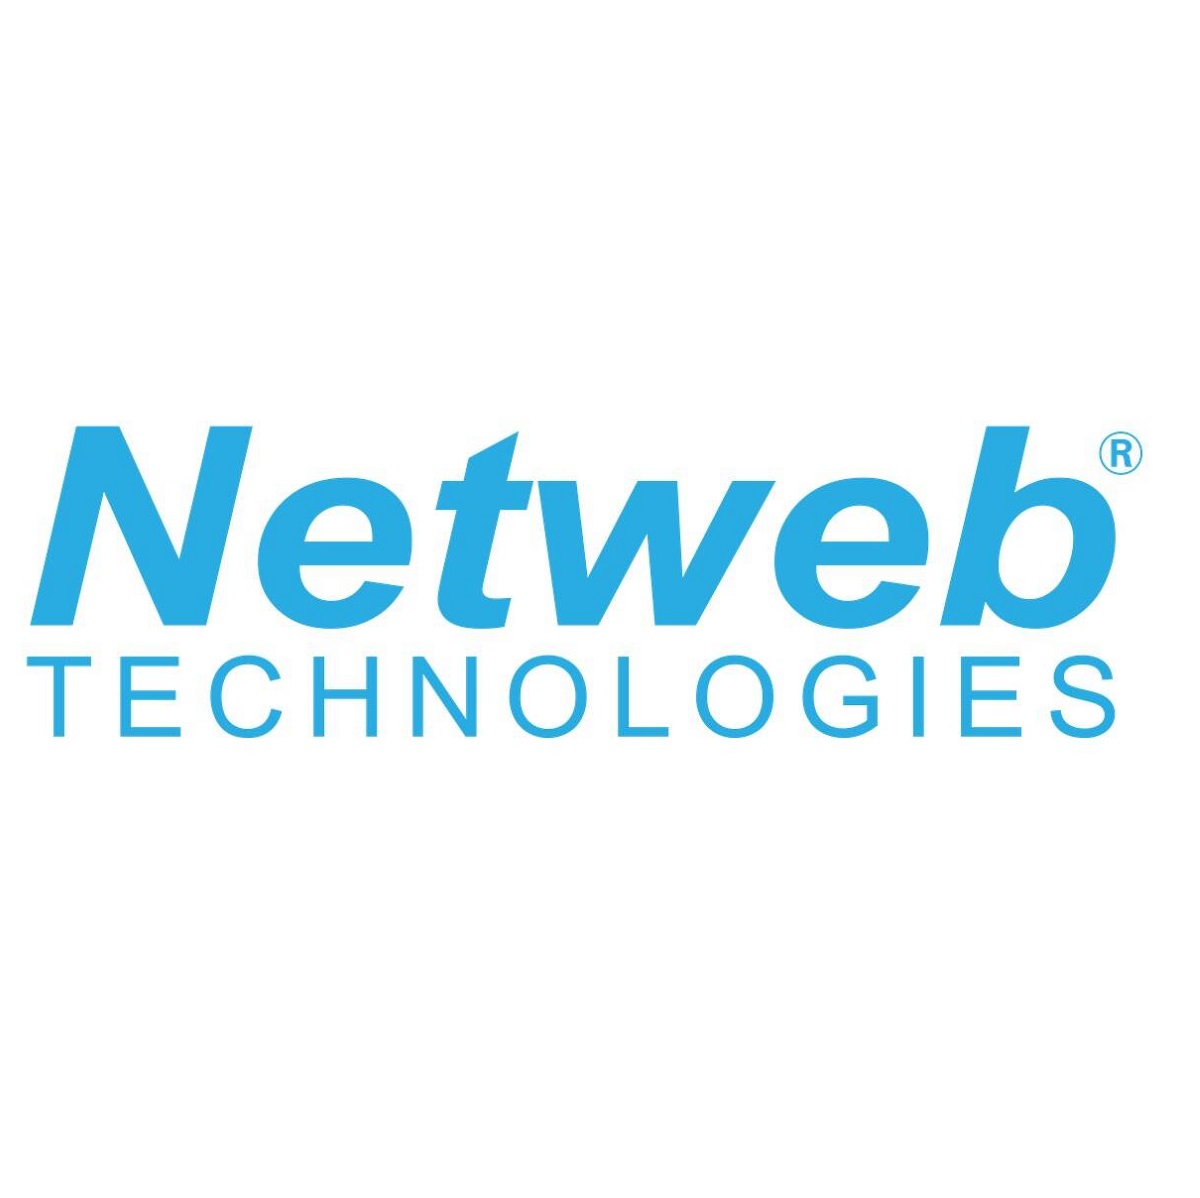 netweb technologies ipo